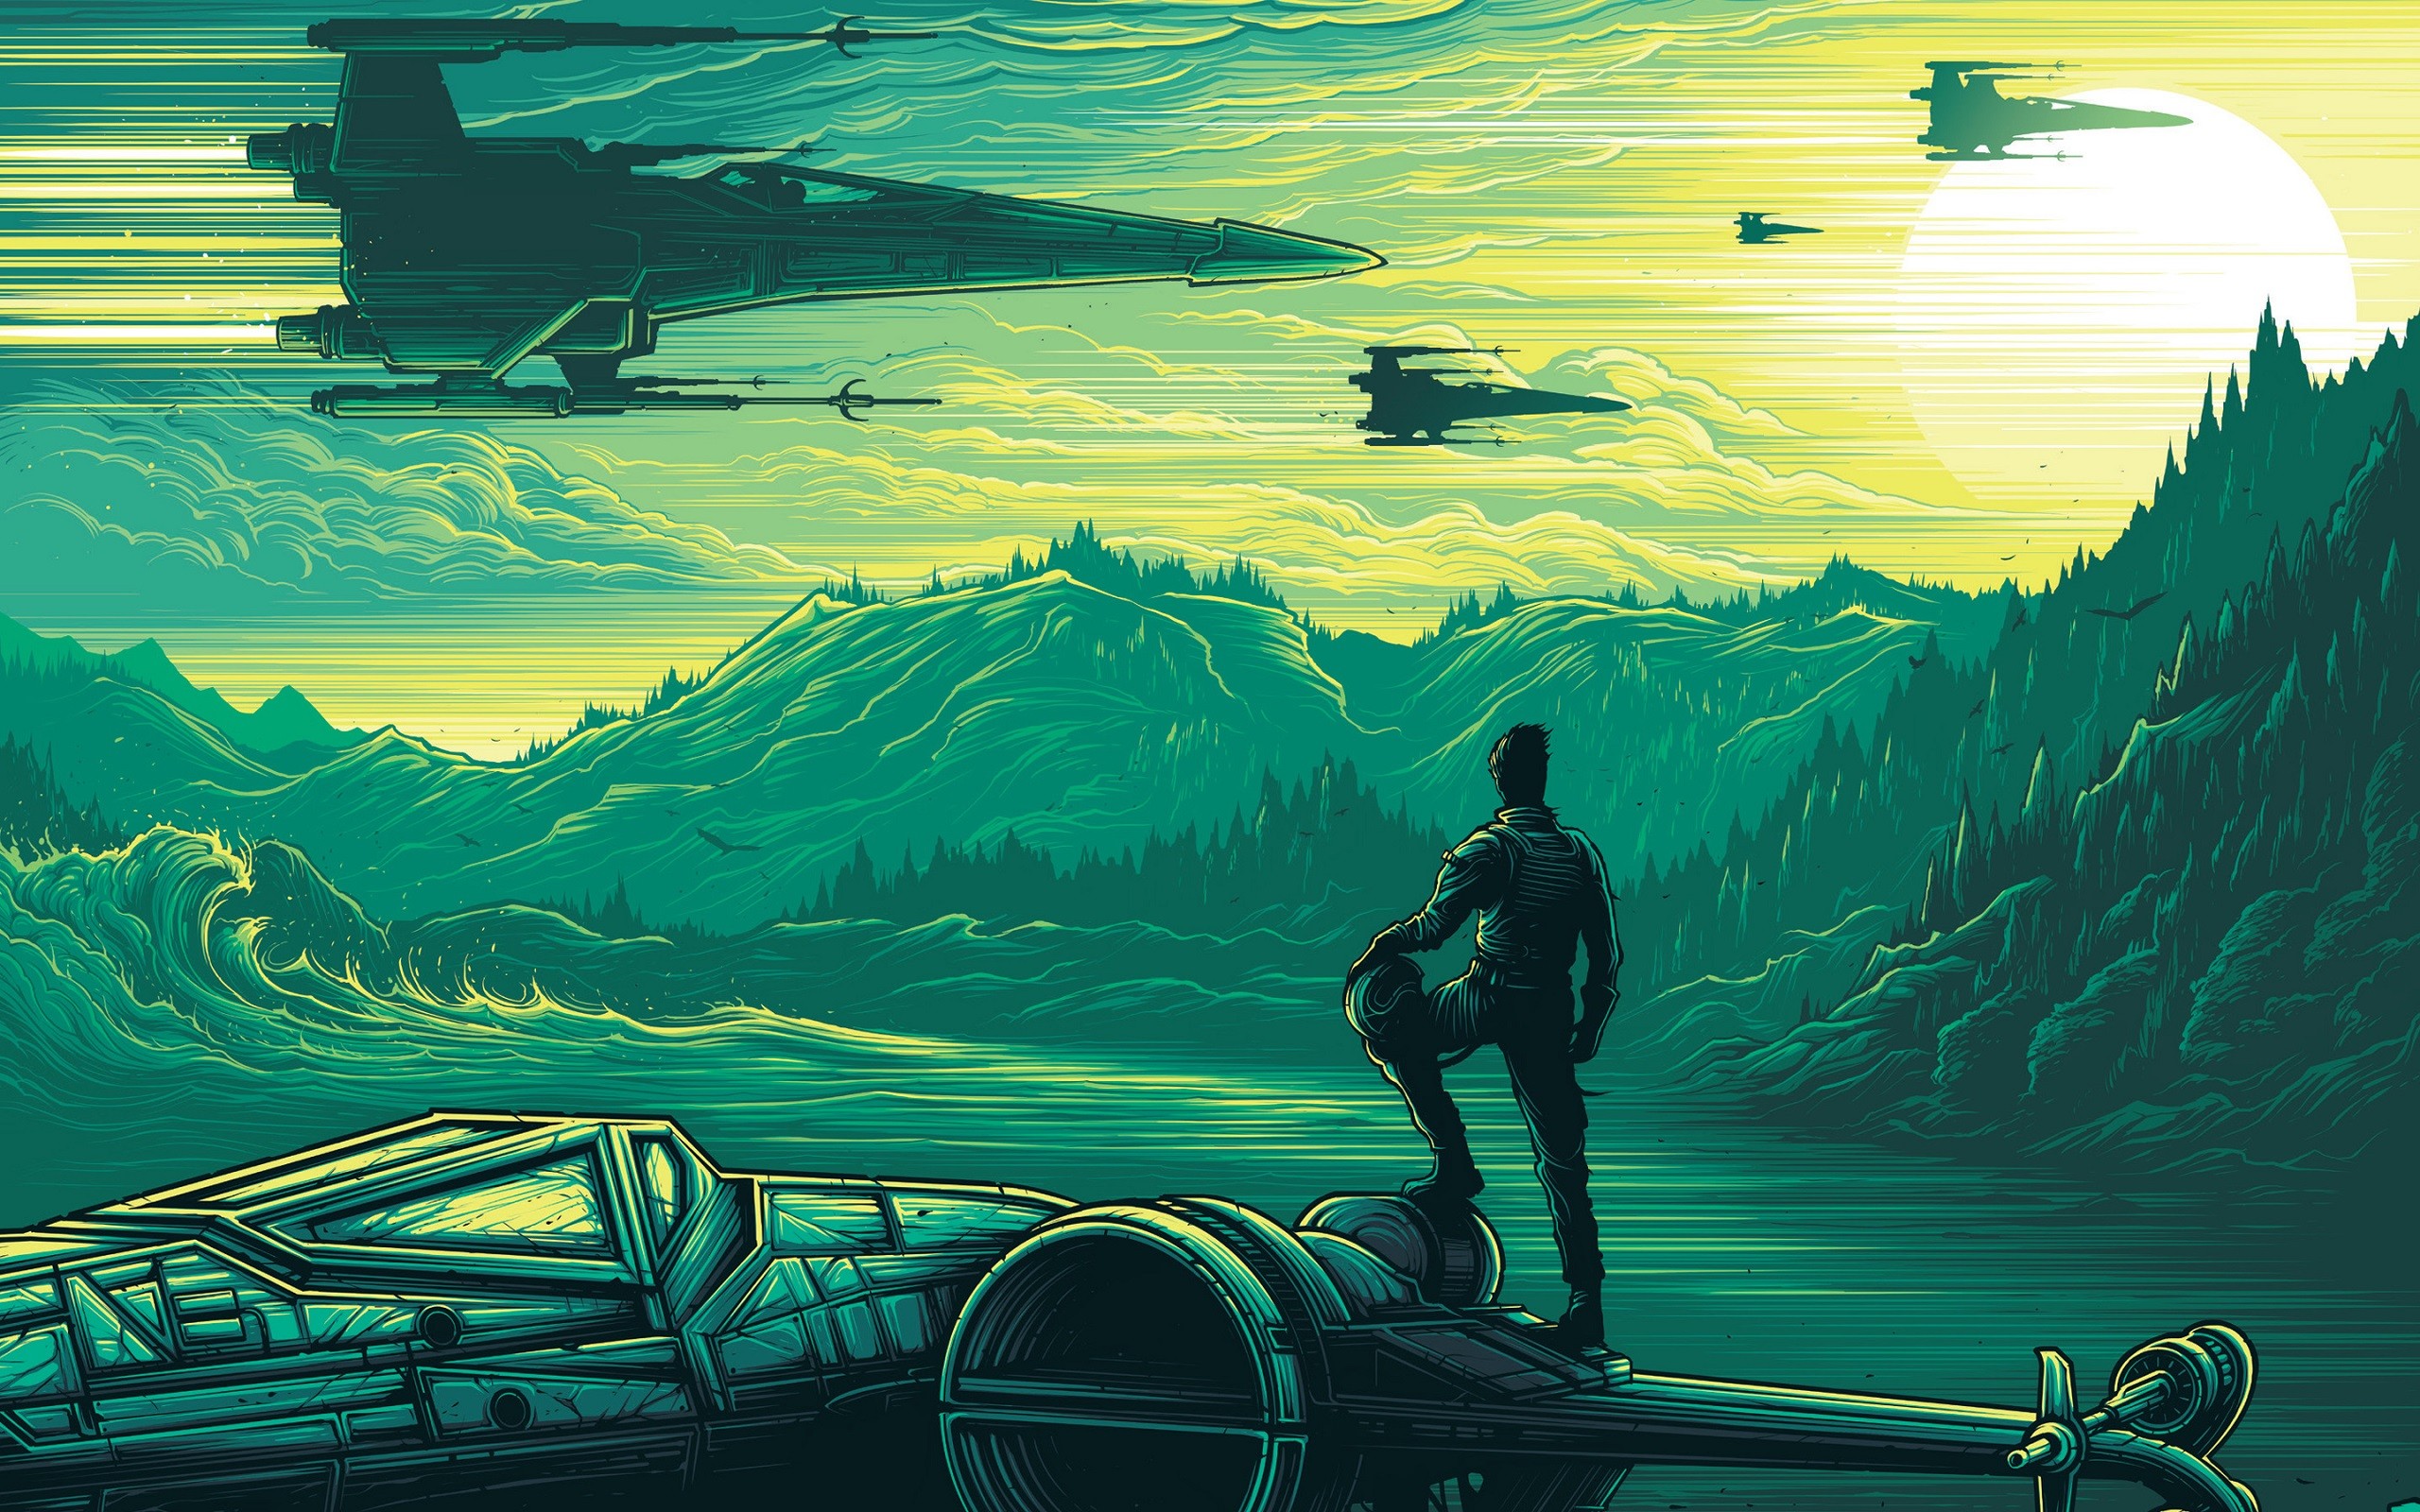 General 2560x1600 Star Wars Star Wars: The Force Awakens artwork X-wing Dan Mumford science fiction movies Star Wars Ships vehicle